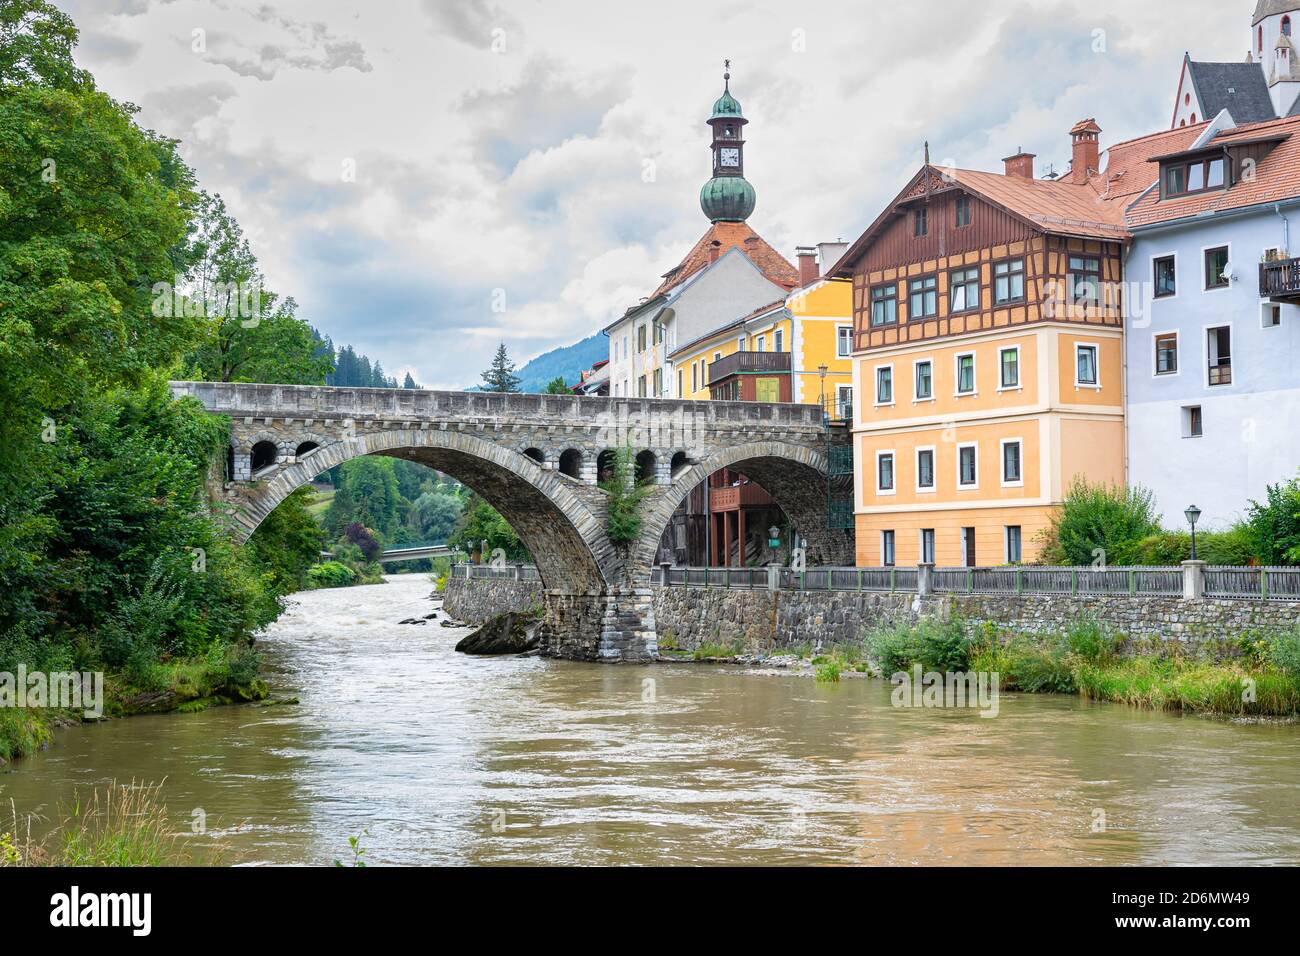 Arch bridge over river Mur in historic town of Murau in central eastern Alps, Austria Stock Photo